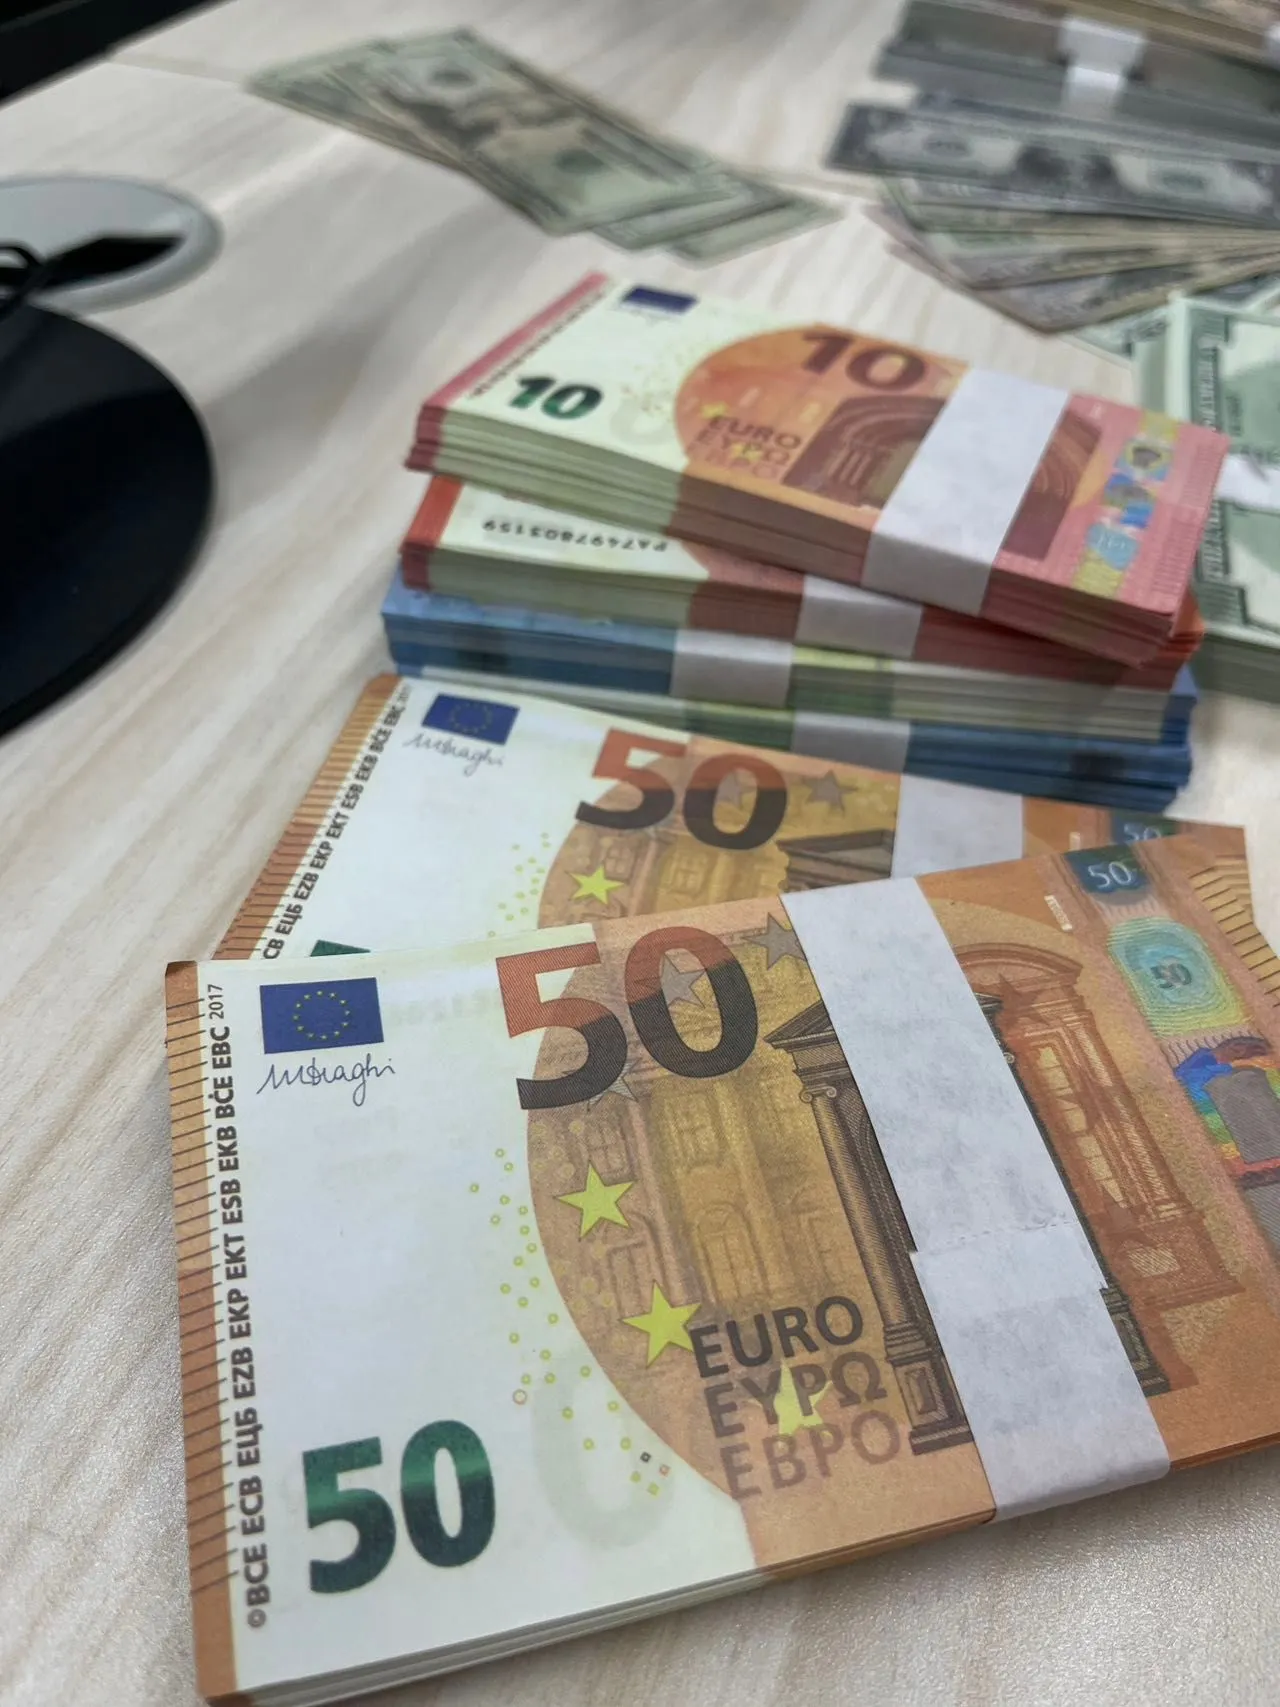 Copy Actual Banknotes 1:2 Real Size Money Euro Ffcjb Counterfeit Cectk